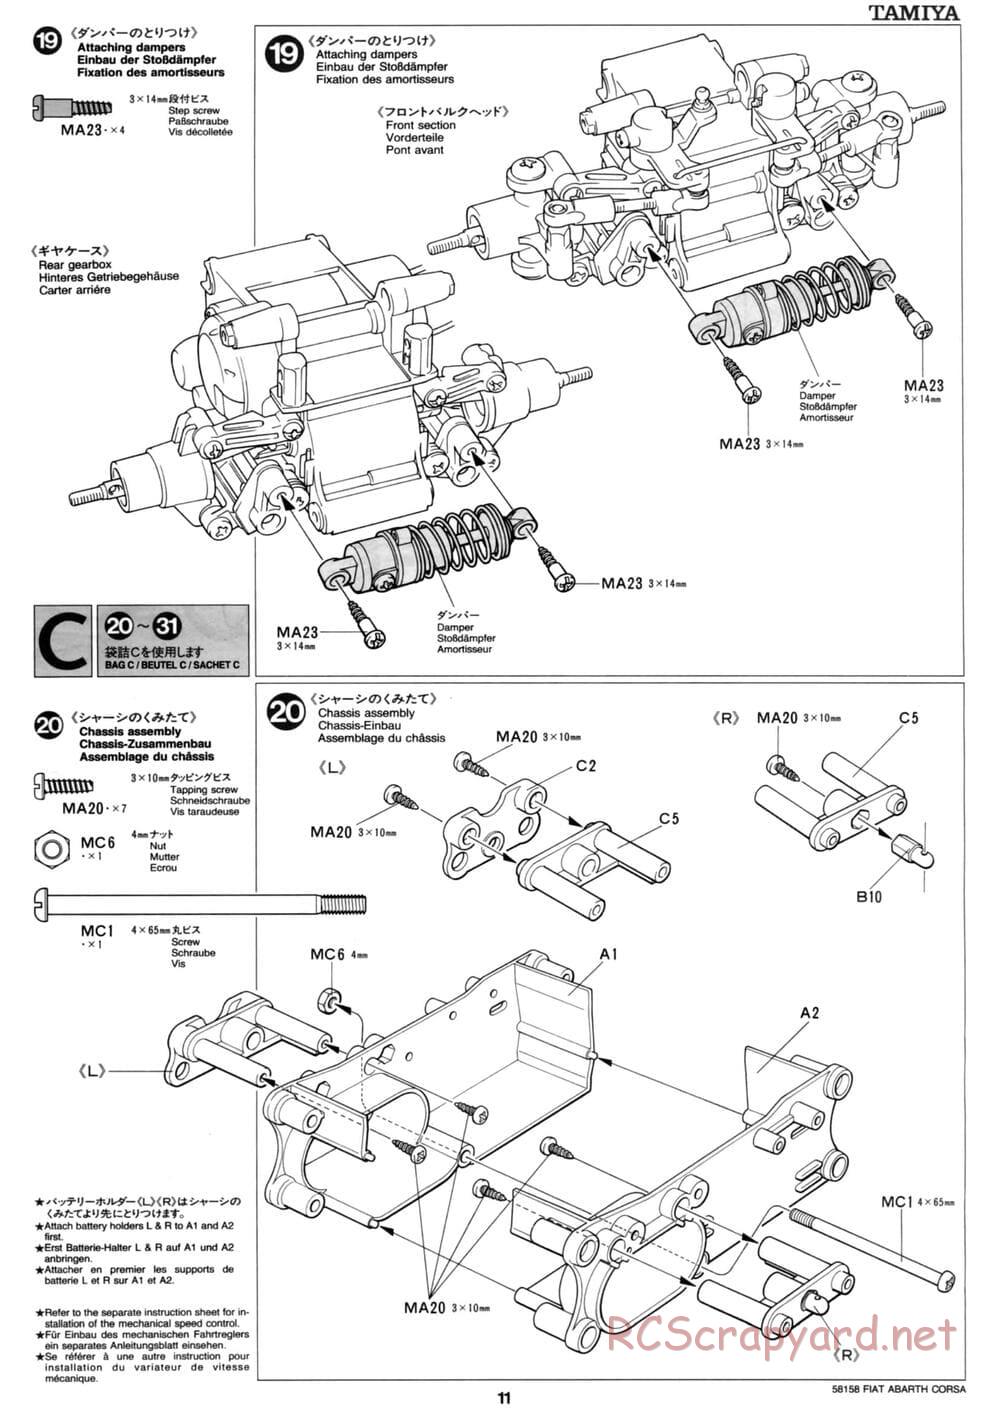 Tamiya - Fiat Abarth 1000 TCR Berlina Corse - M02 Chassis - Manual - Page 11